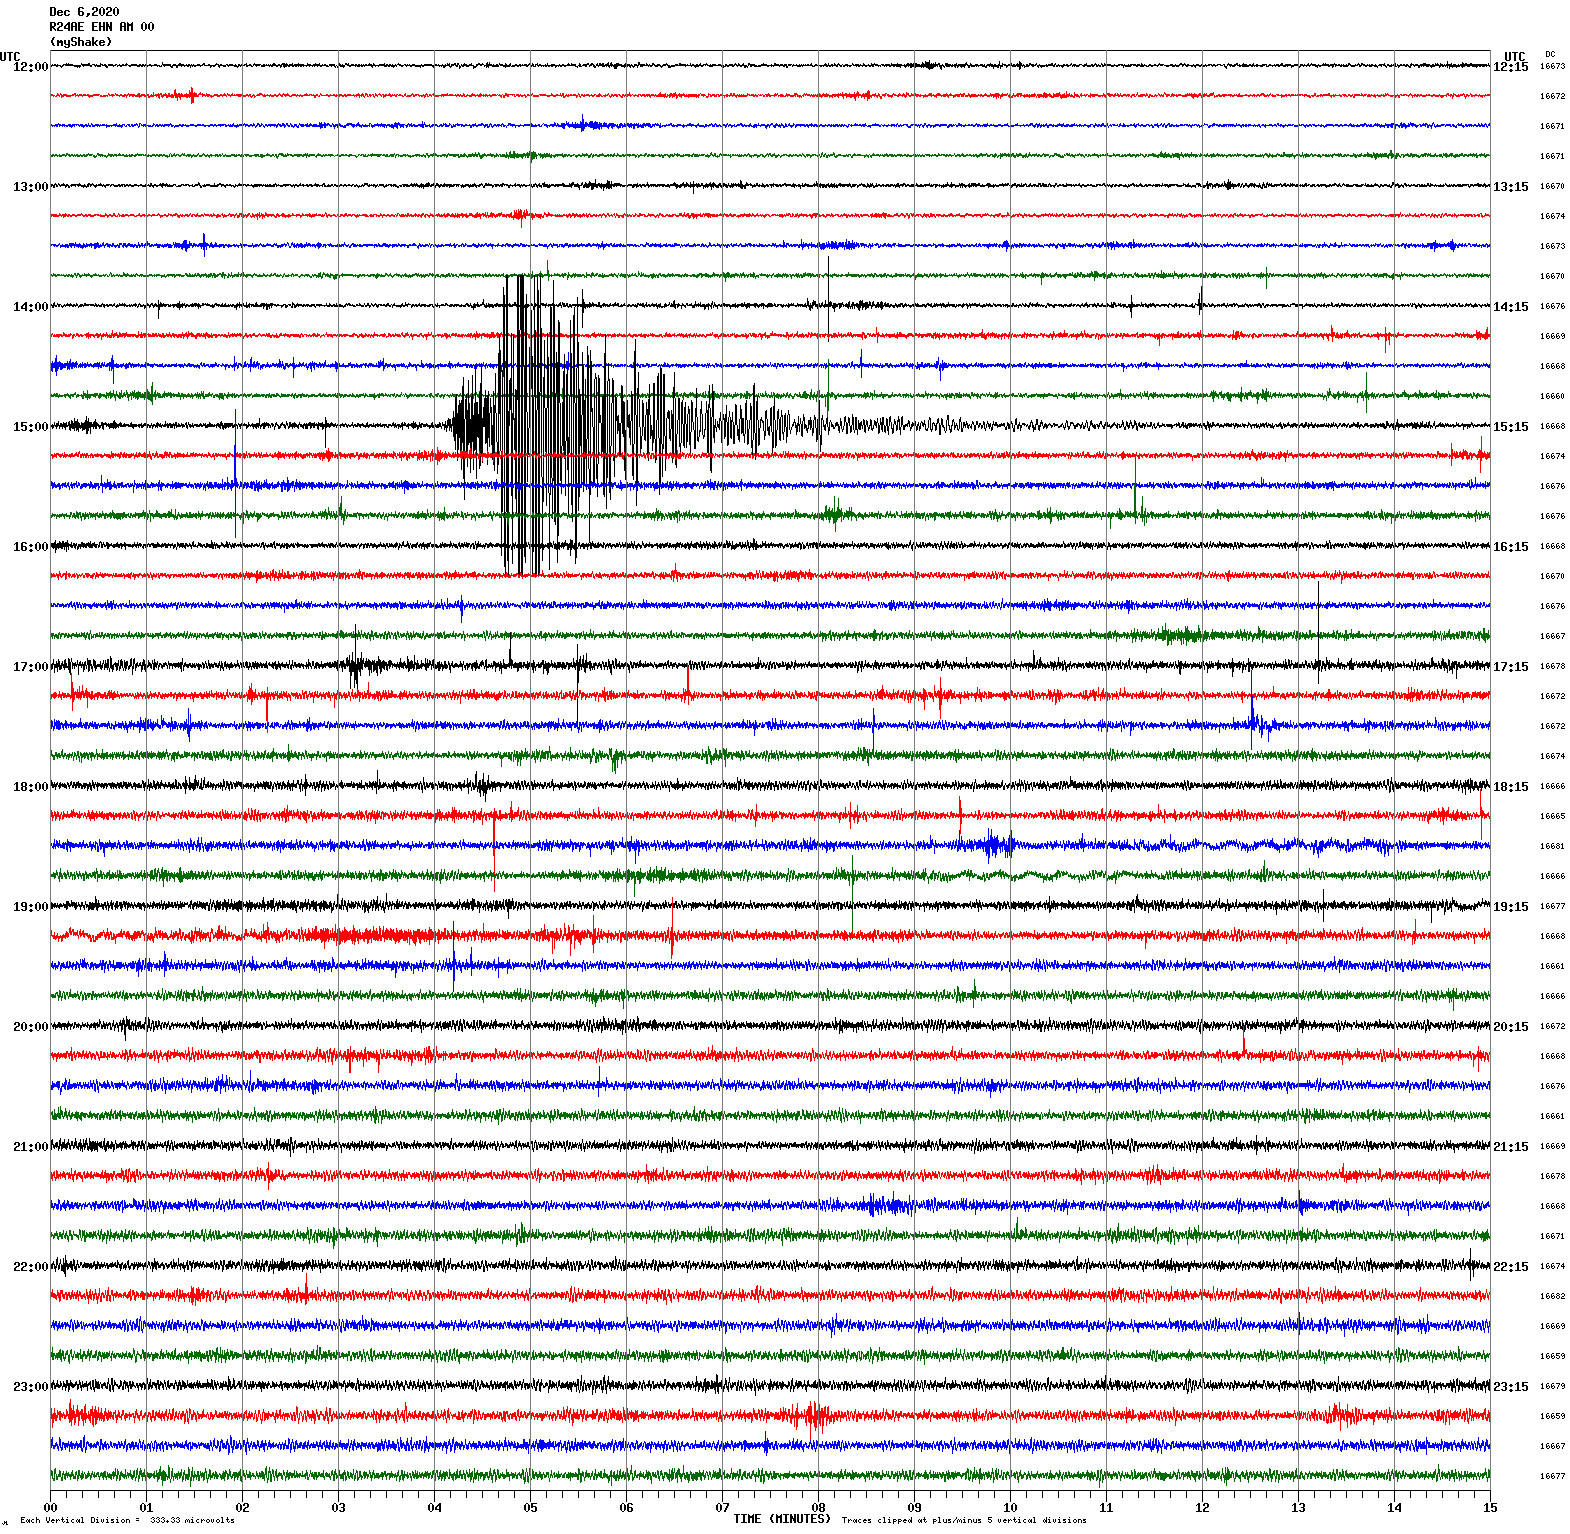 /seismic-data/R24AE/R24AE_EHN_AM_00.2020120612.gif